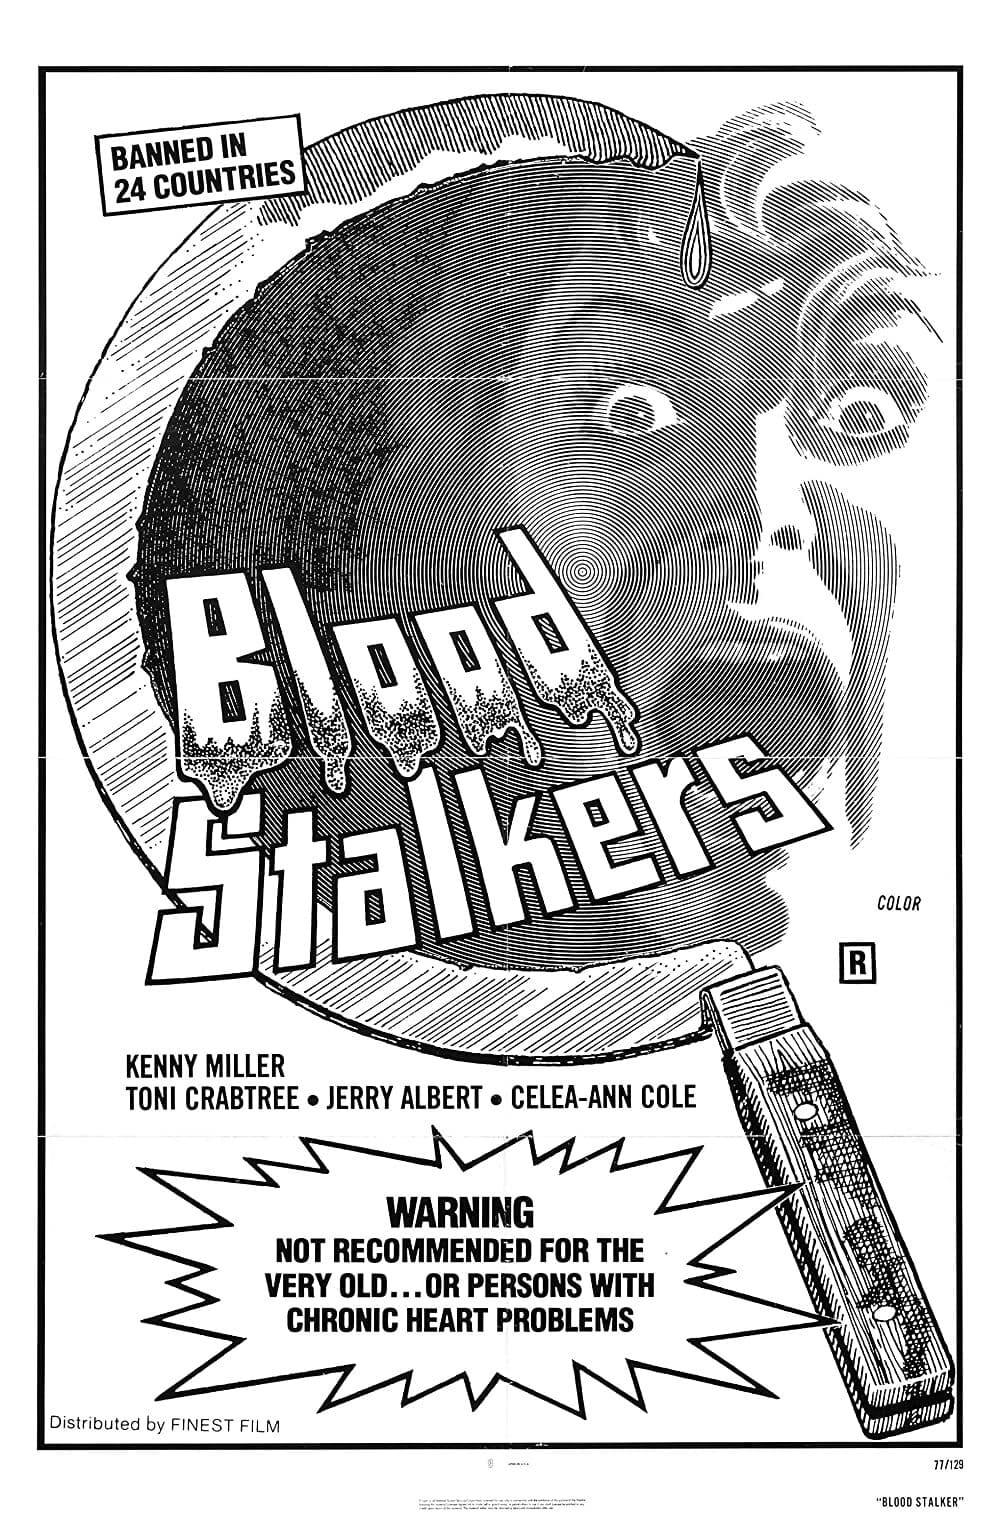 Blood Stalkers poster